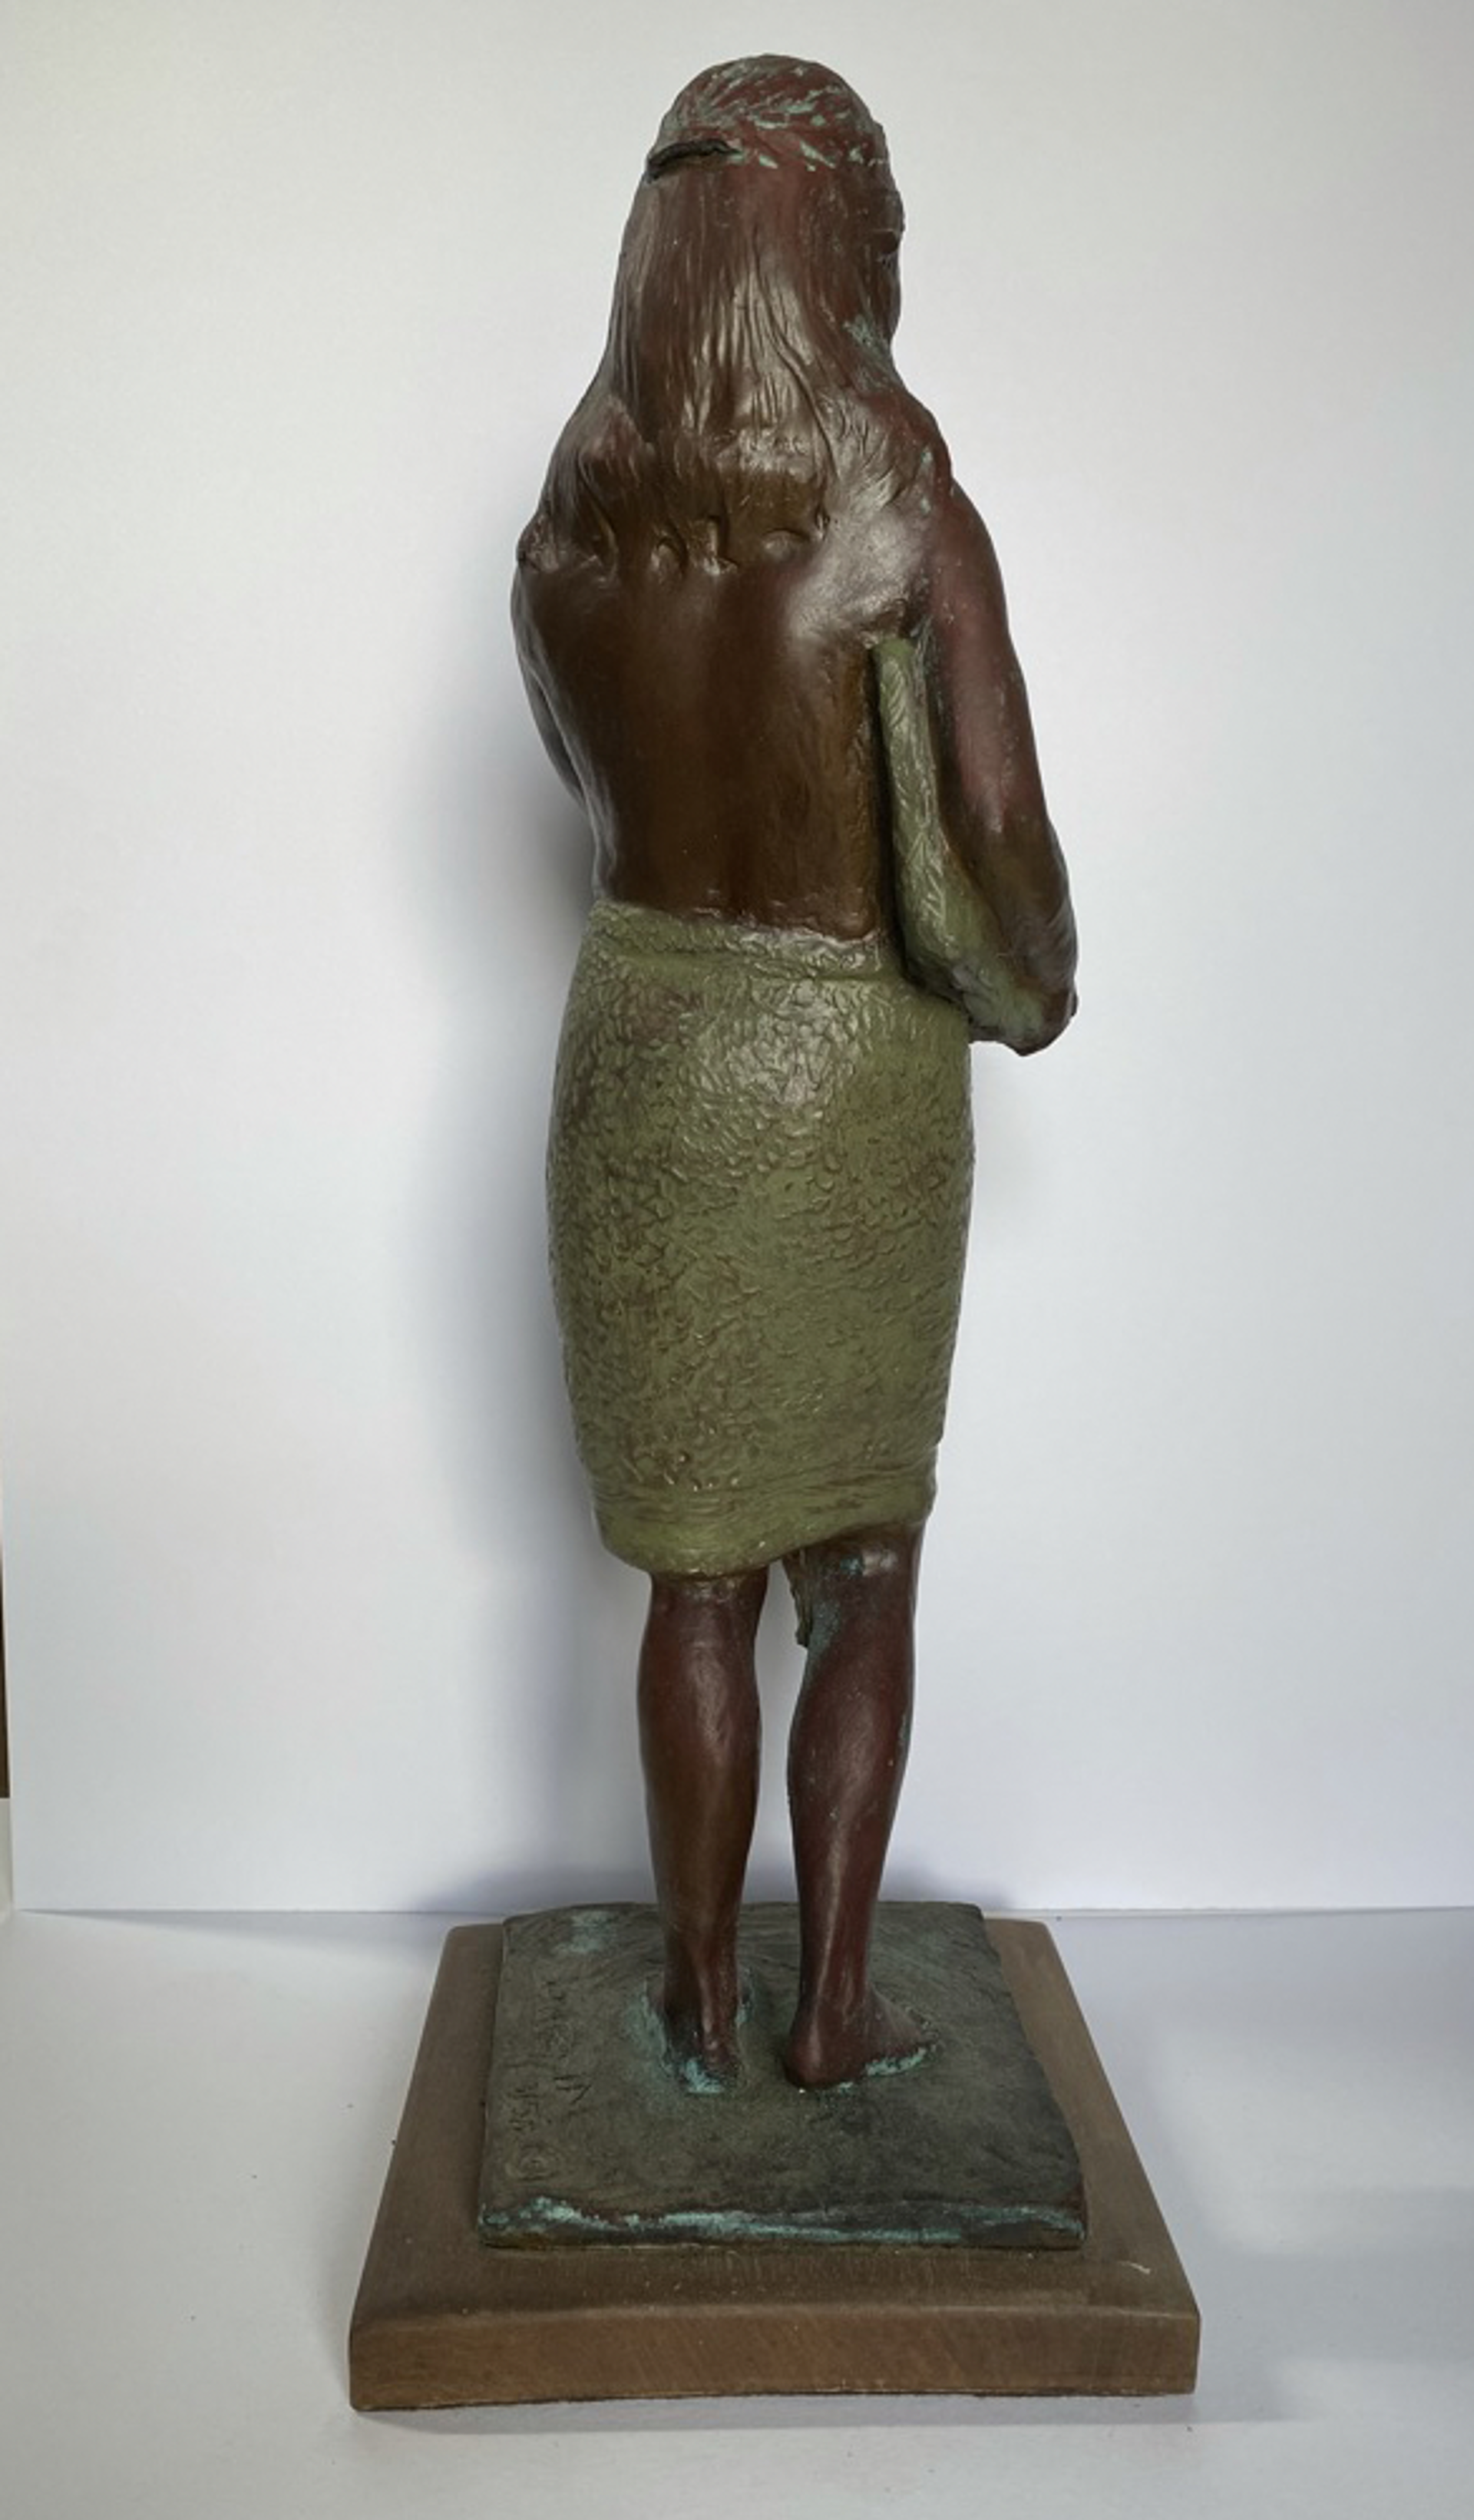 Lady in Green Skirt Holding Bag by A. LaMoyne Garside